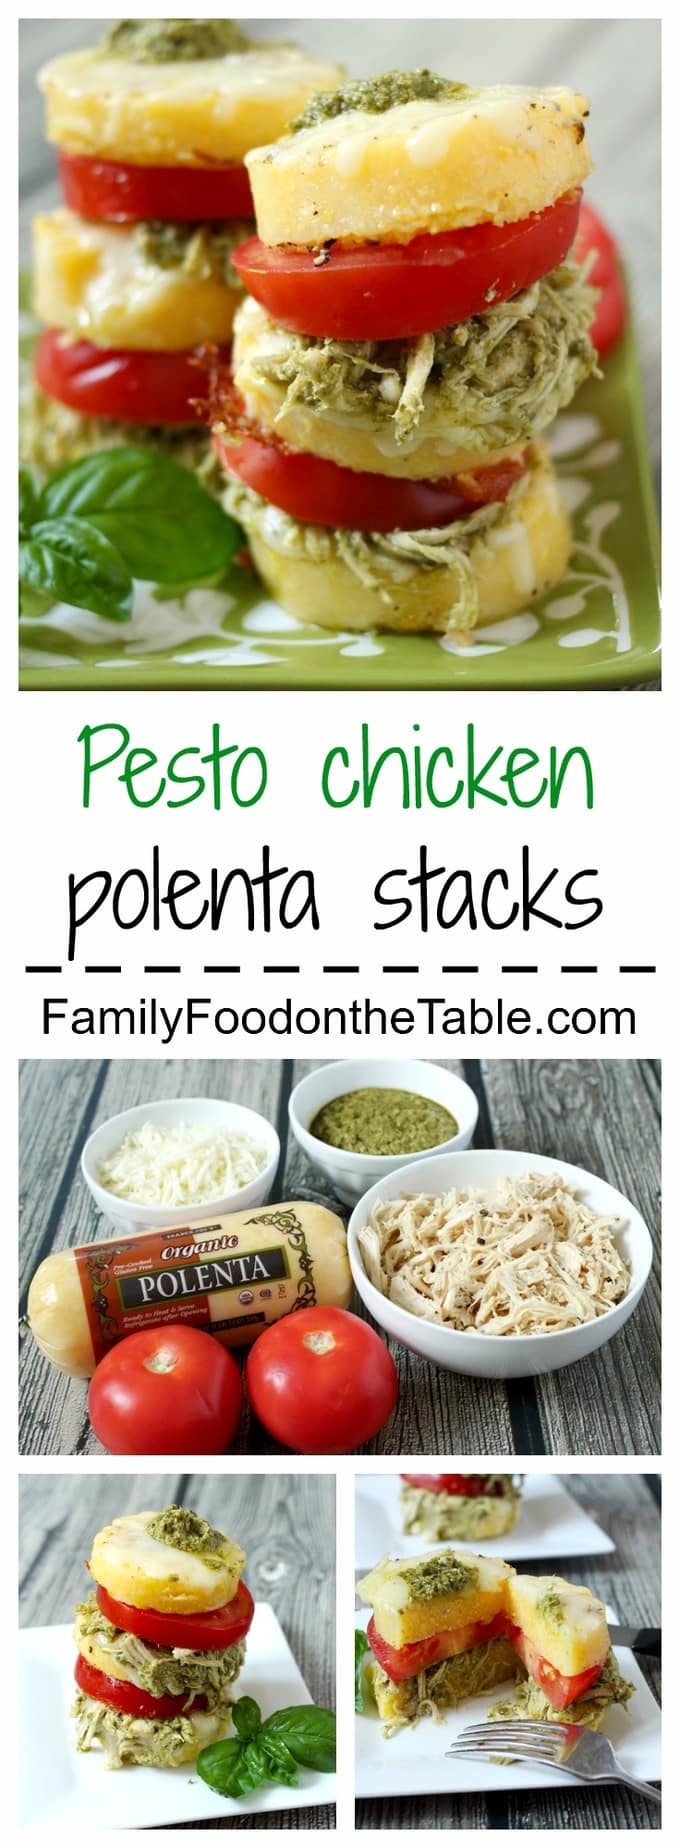 Pesto chicken polenta stacks make a delicious 10-minute weeknight dinner!